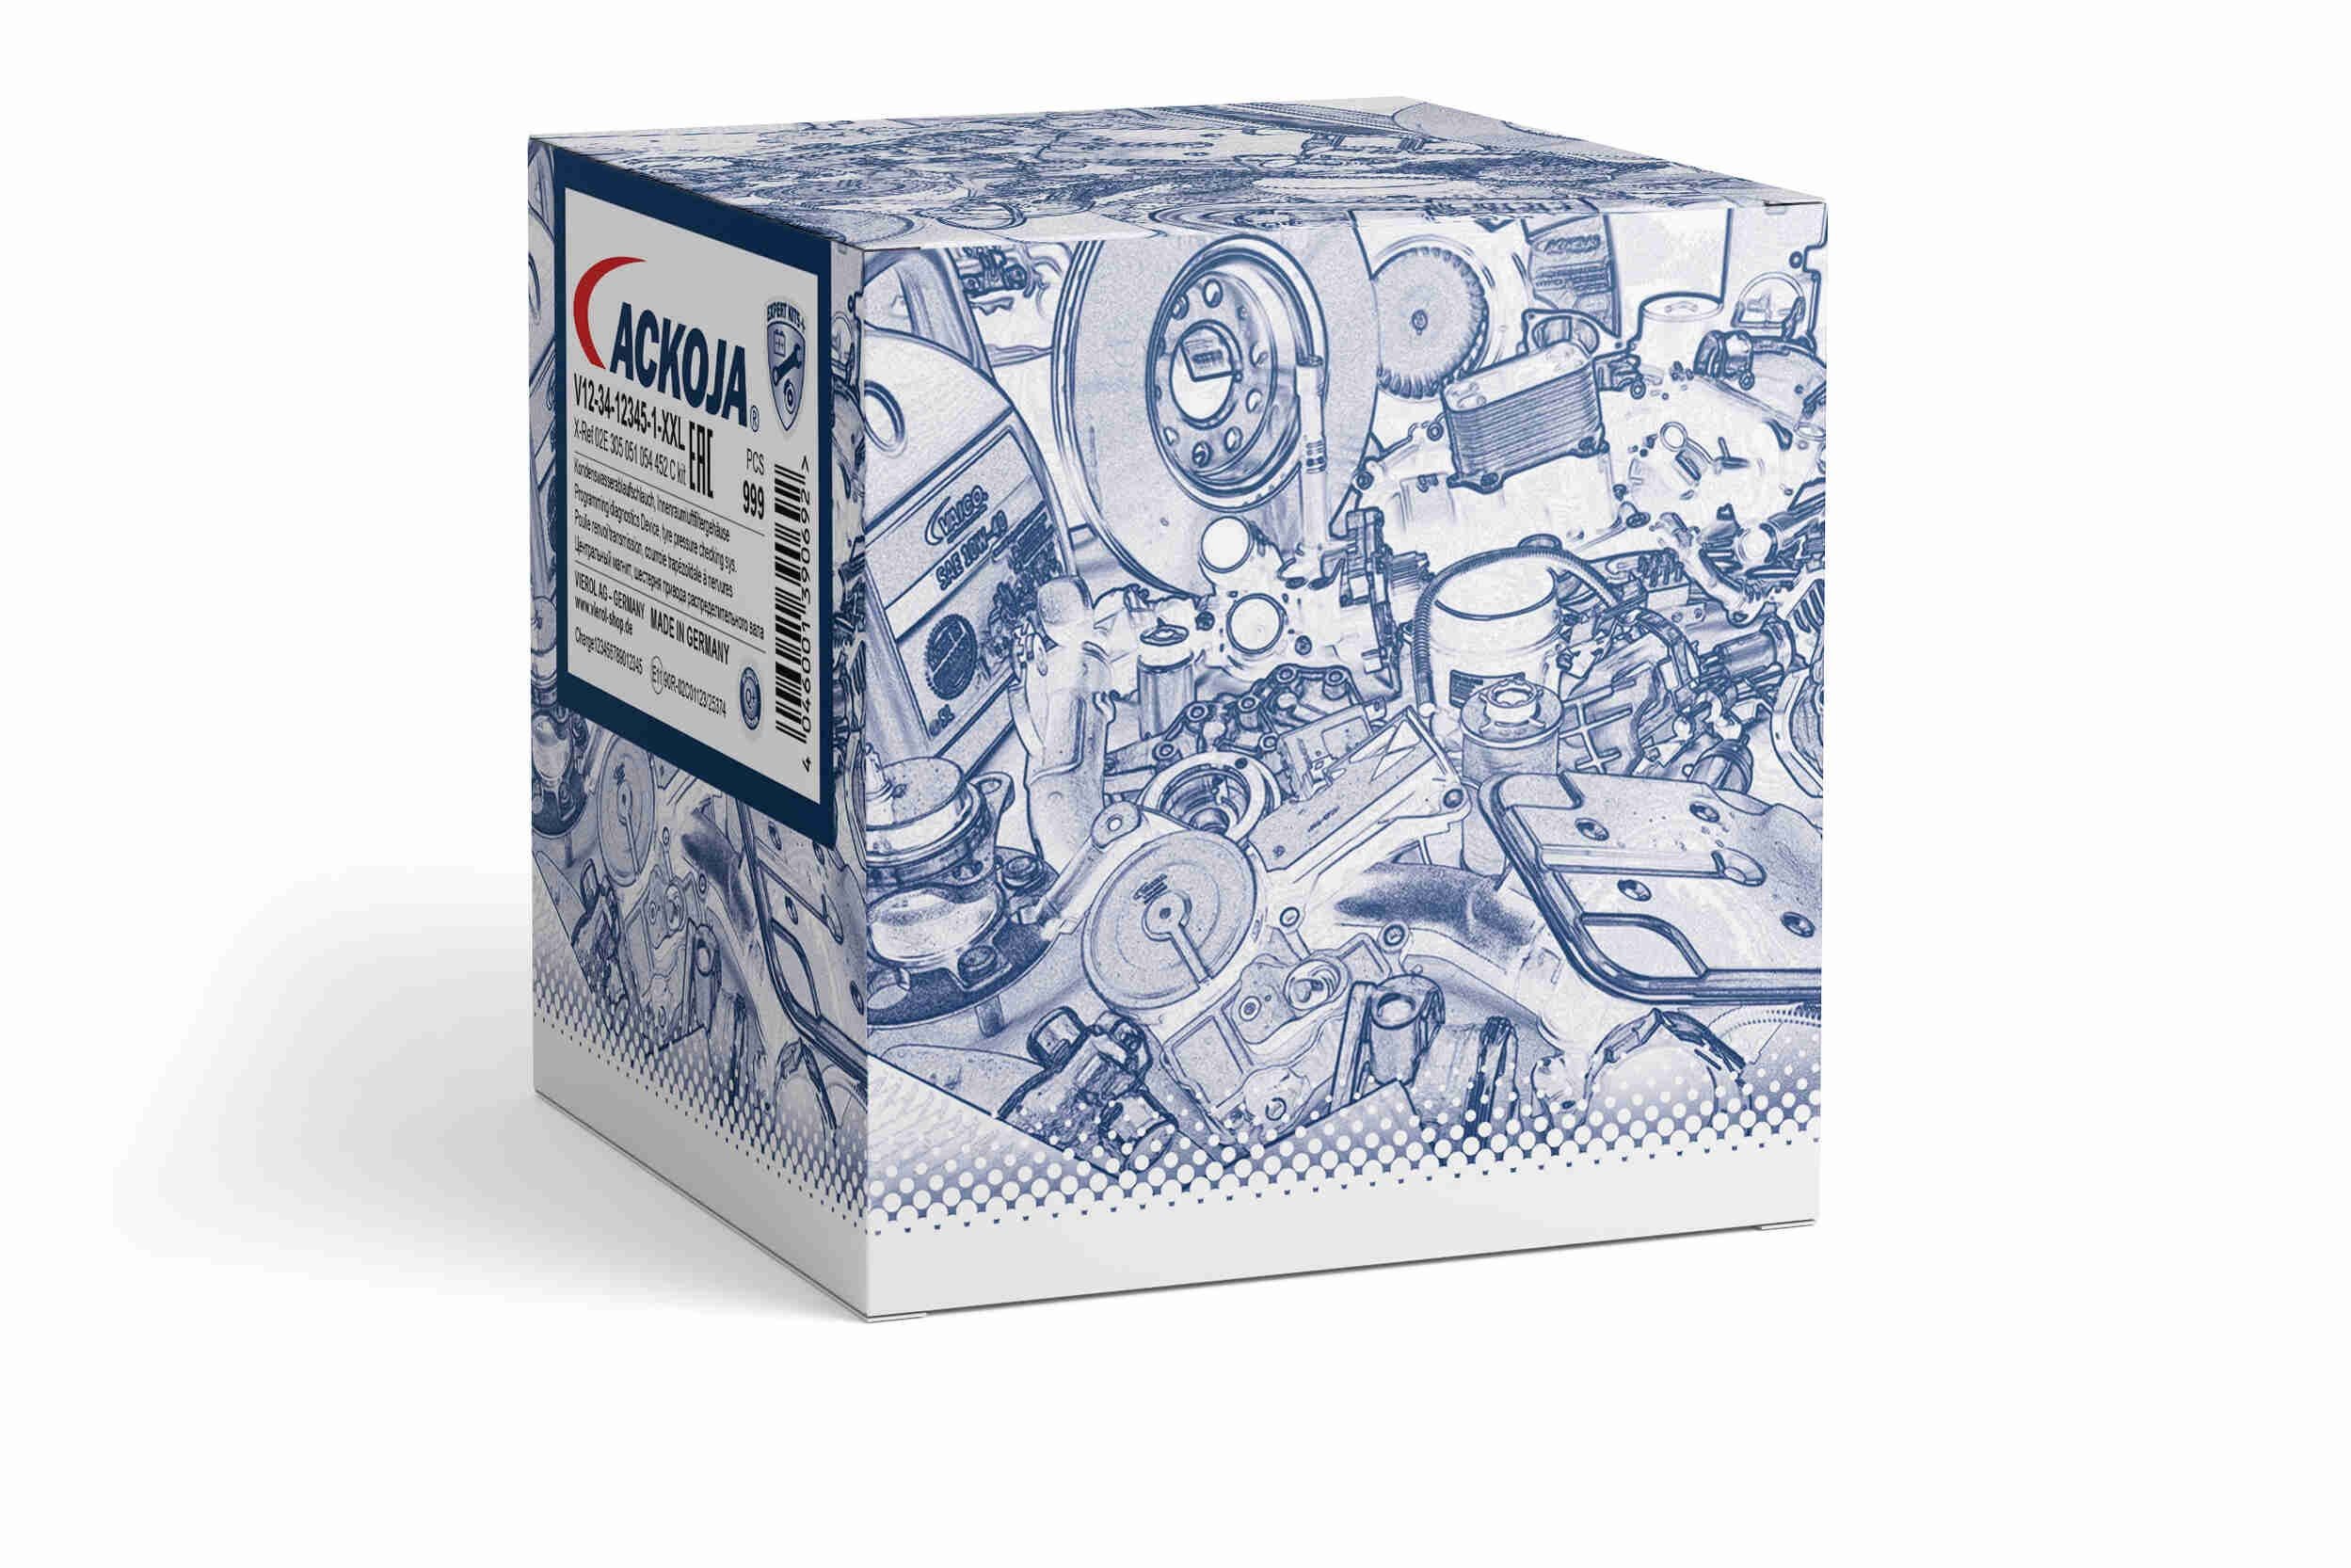 A530084 Camshaft solenoid valve Q+, original equipment manufacturer quality ACKOJA A53-0084 review and test